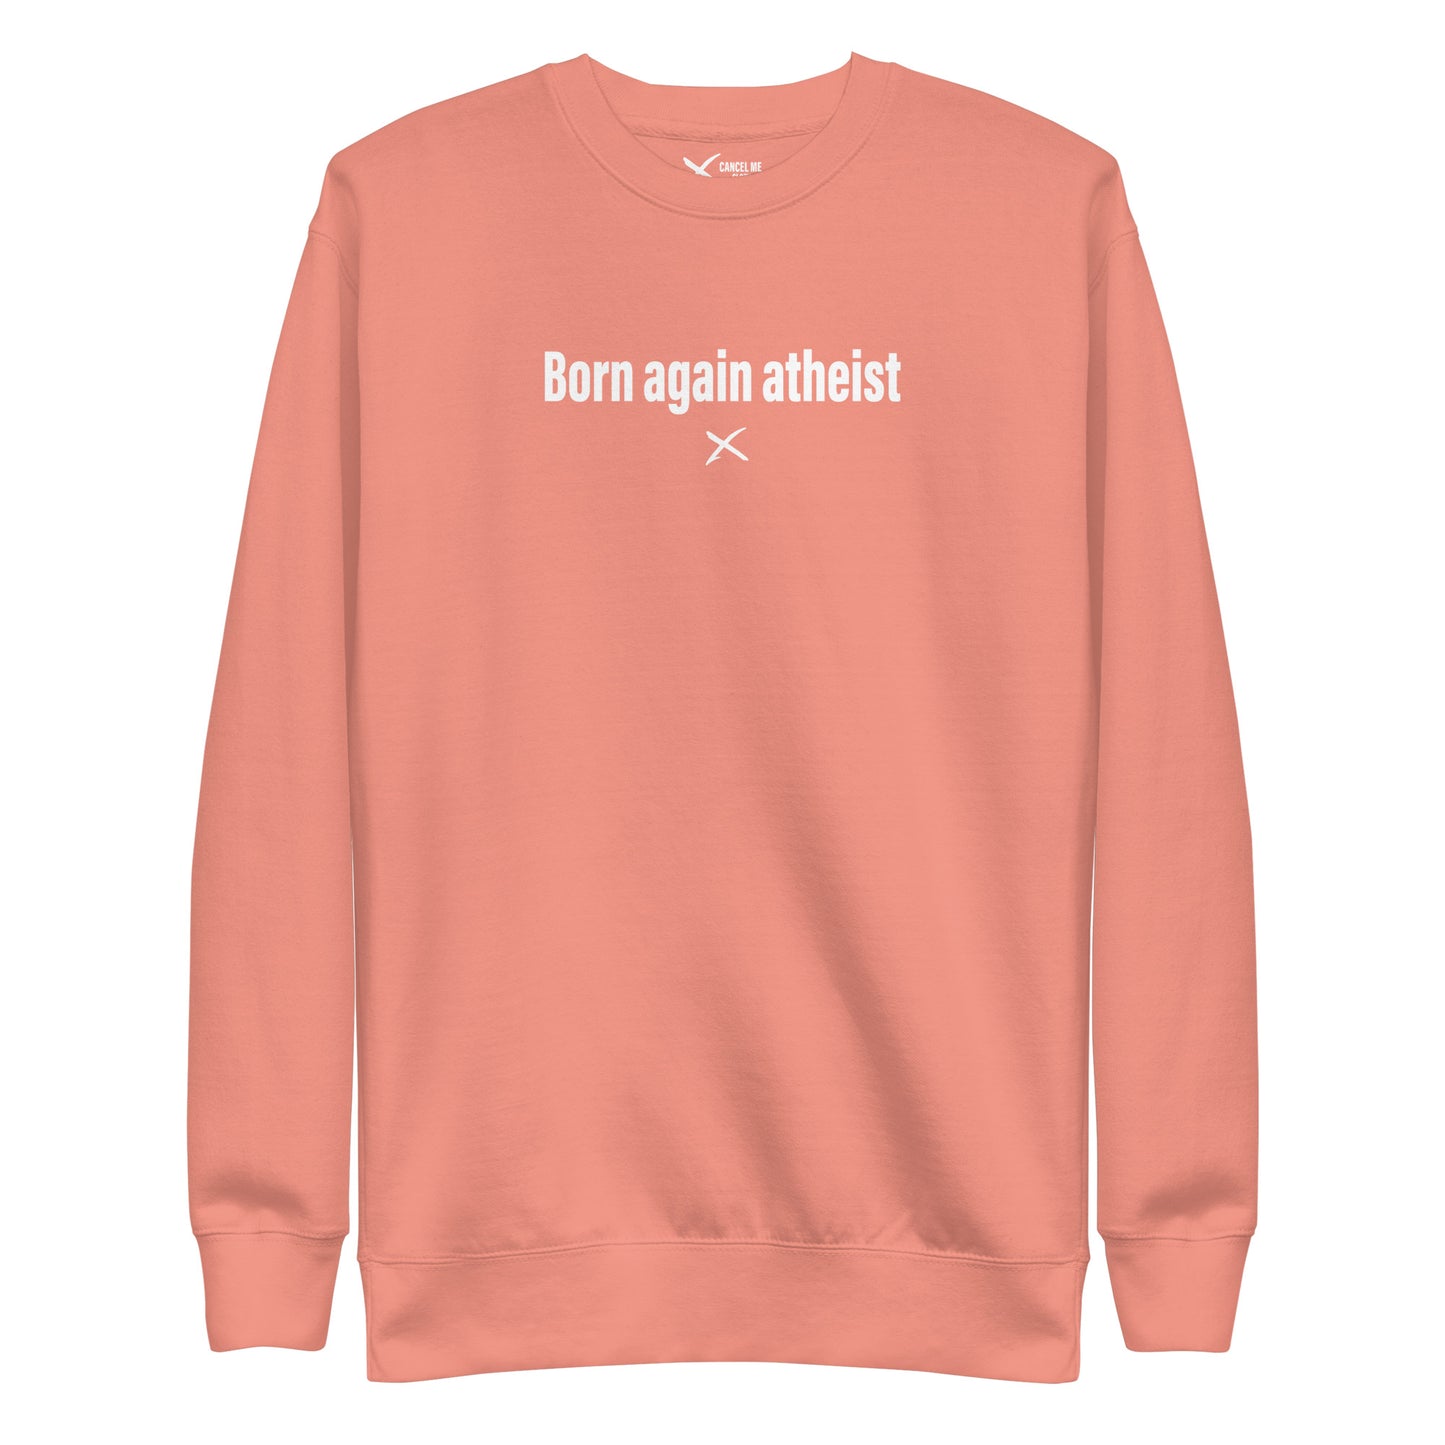 Born again atheist - Sweatshirt